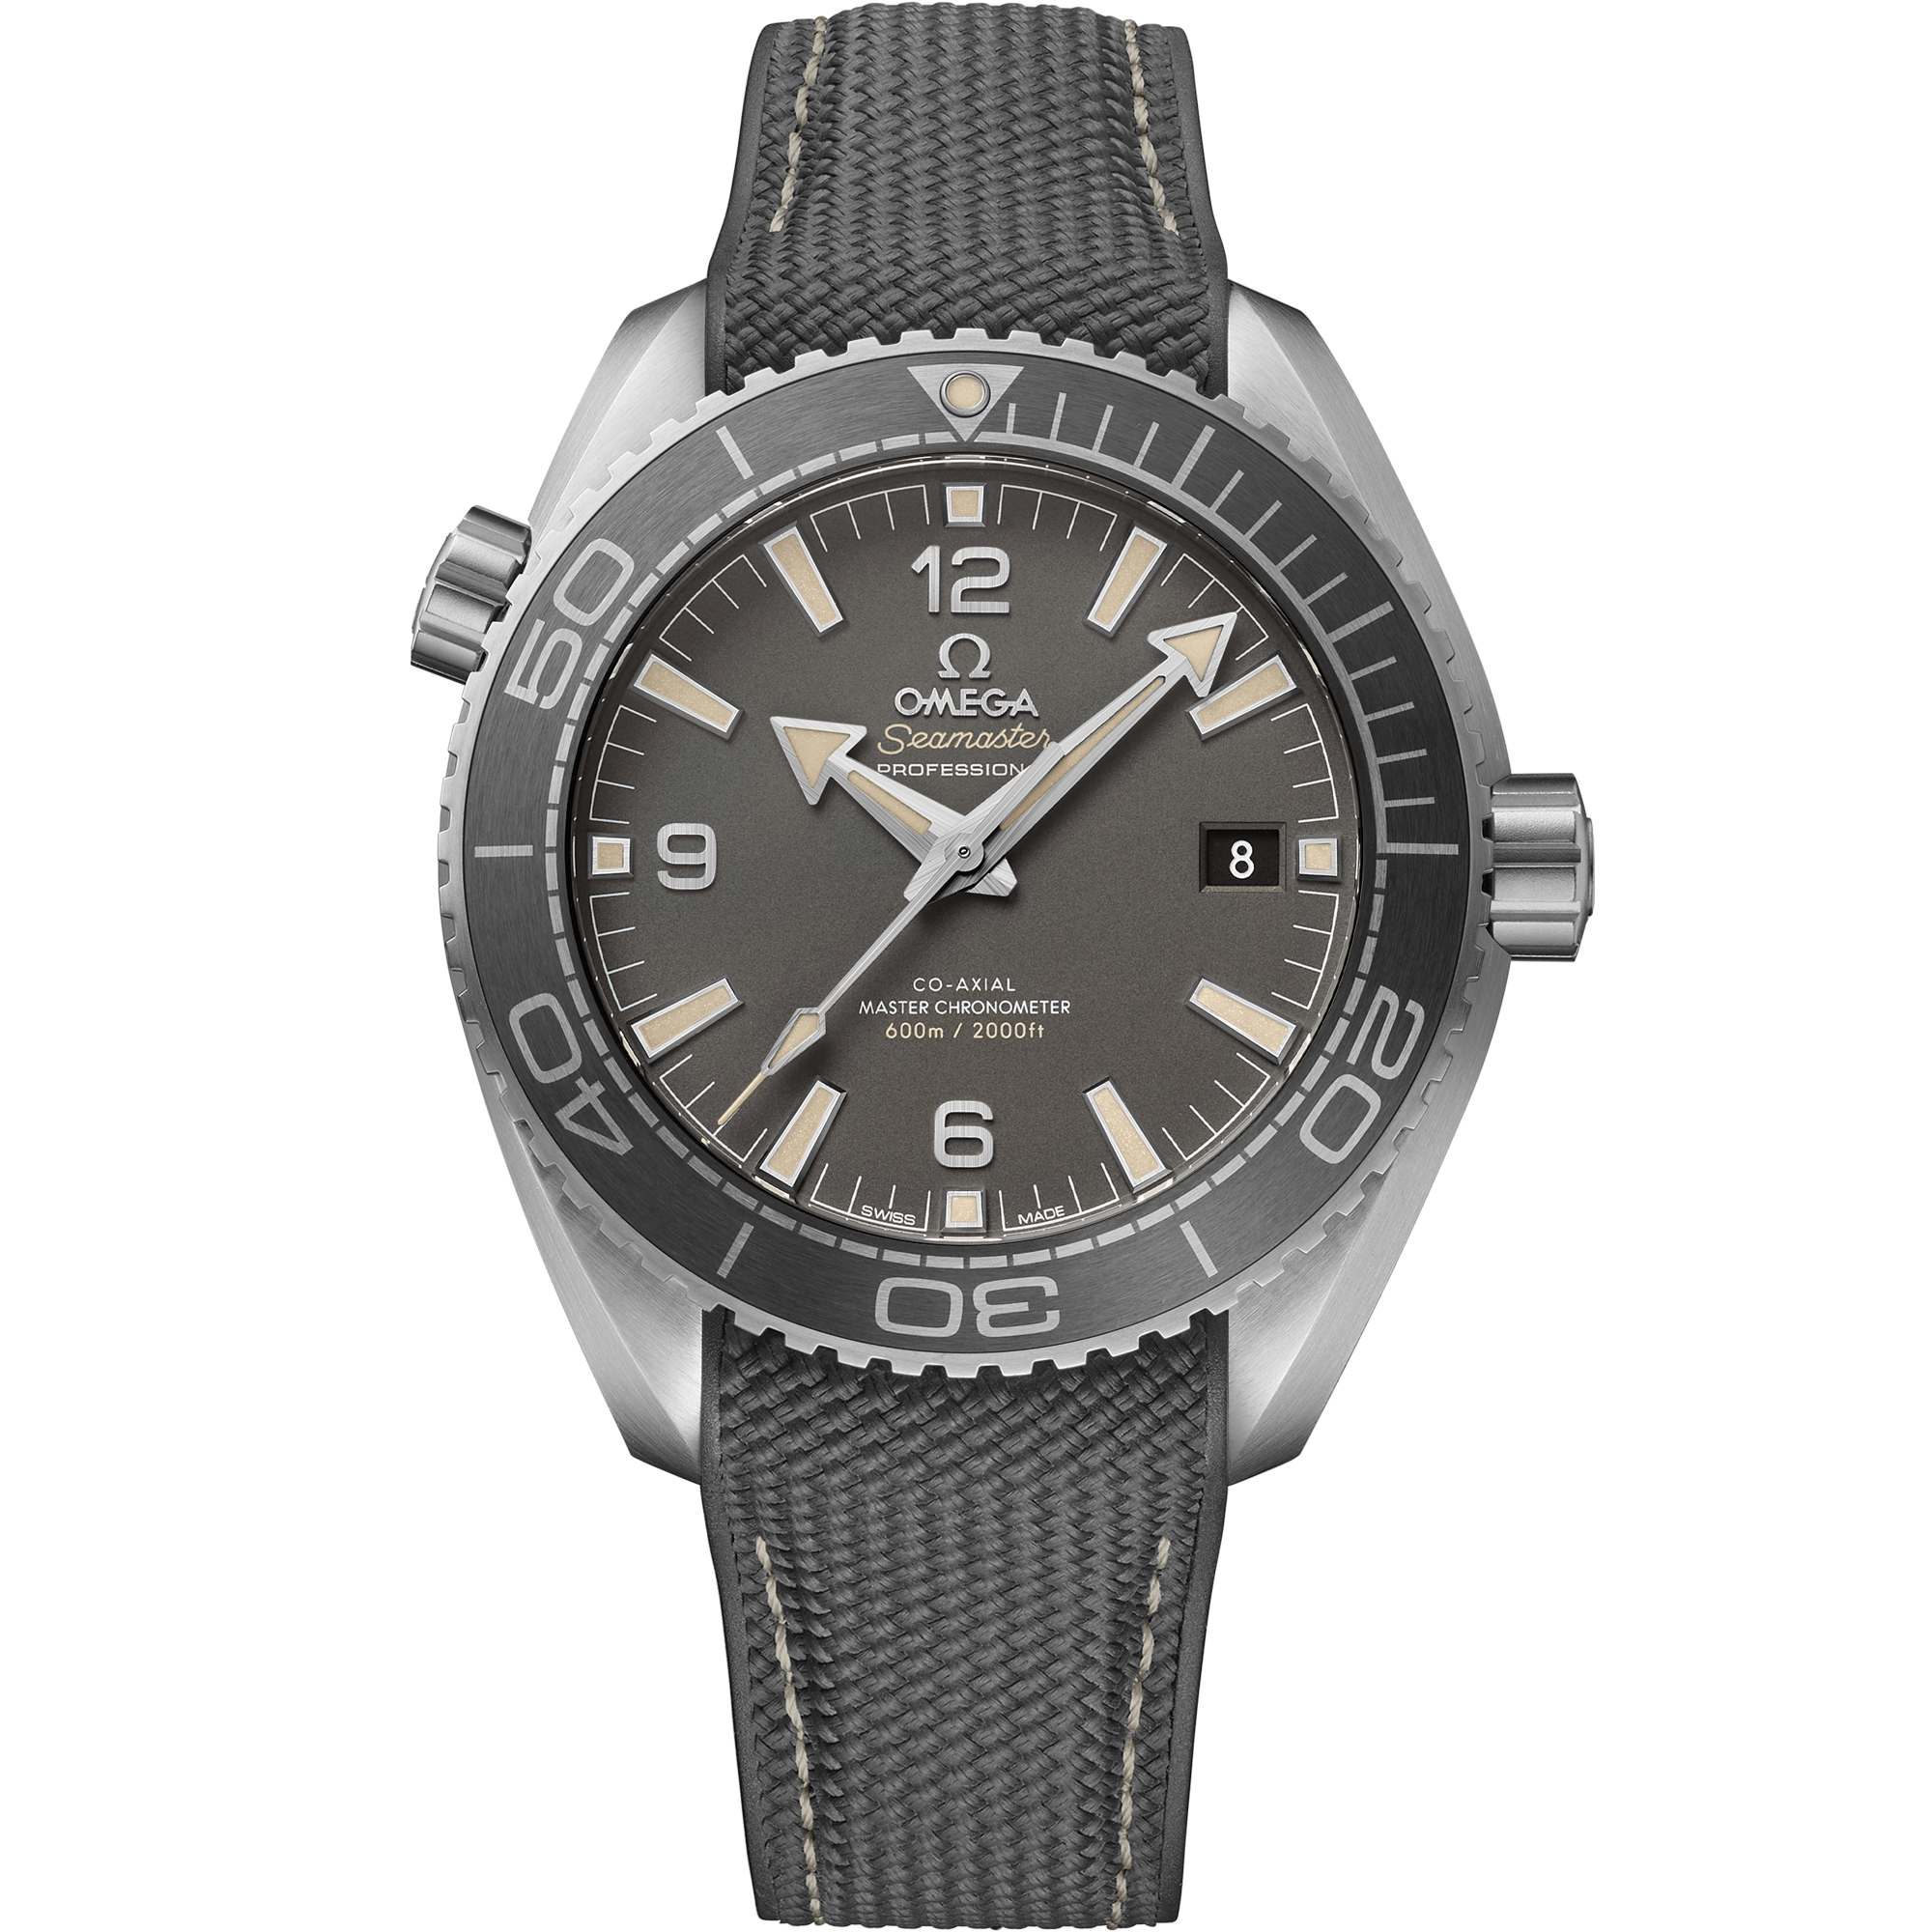 Planet Ocean 600M Seamaster Steel Chronometer Watch 215.32.44.21.01.002 |  OMEGA US®